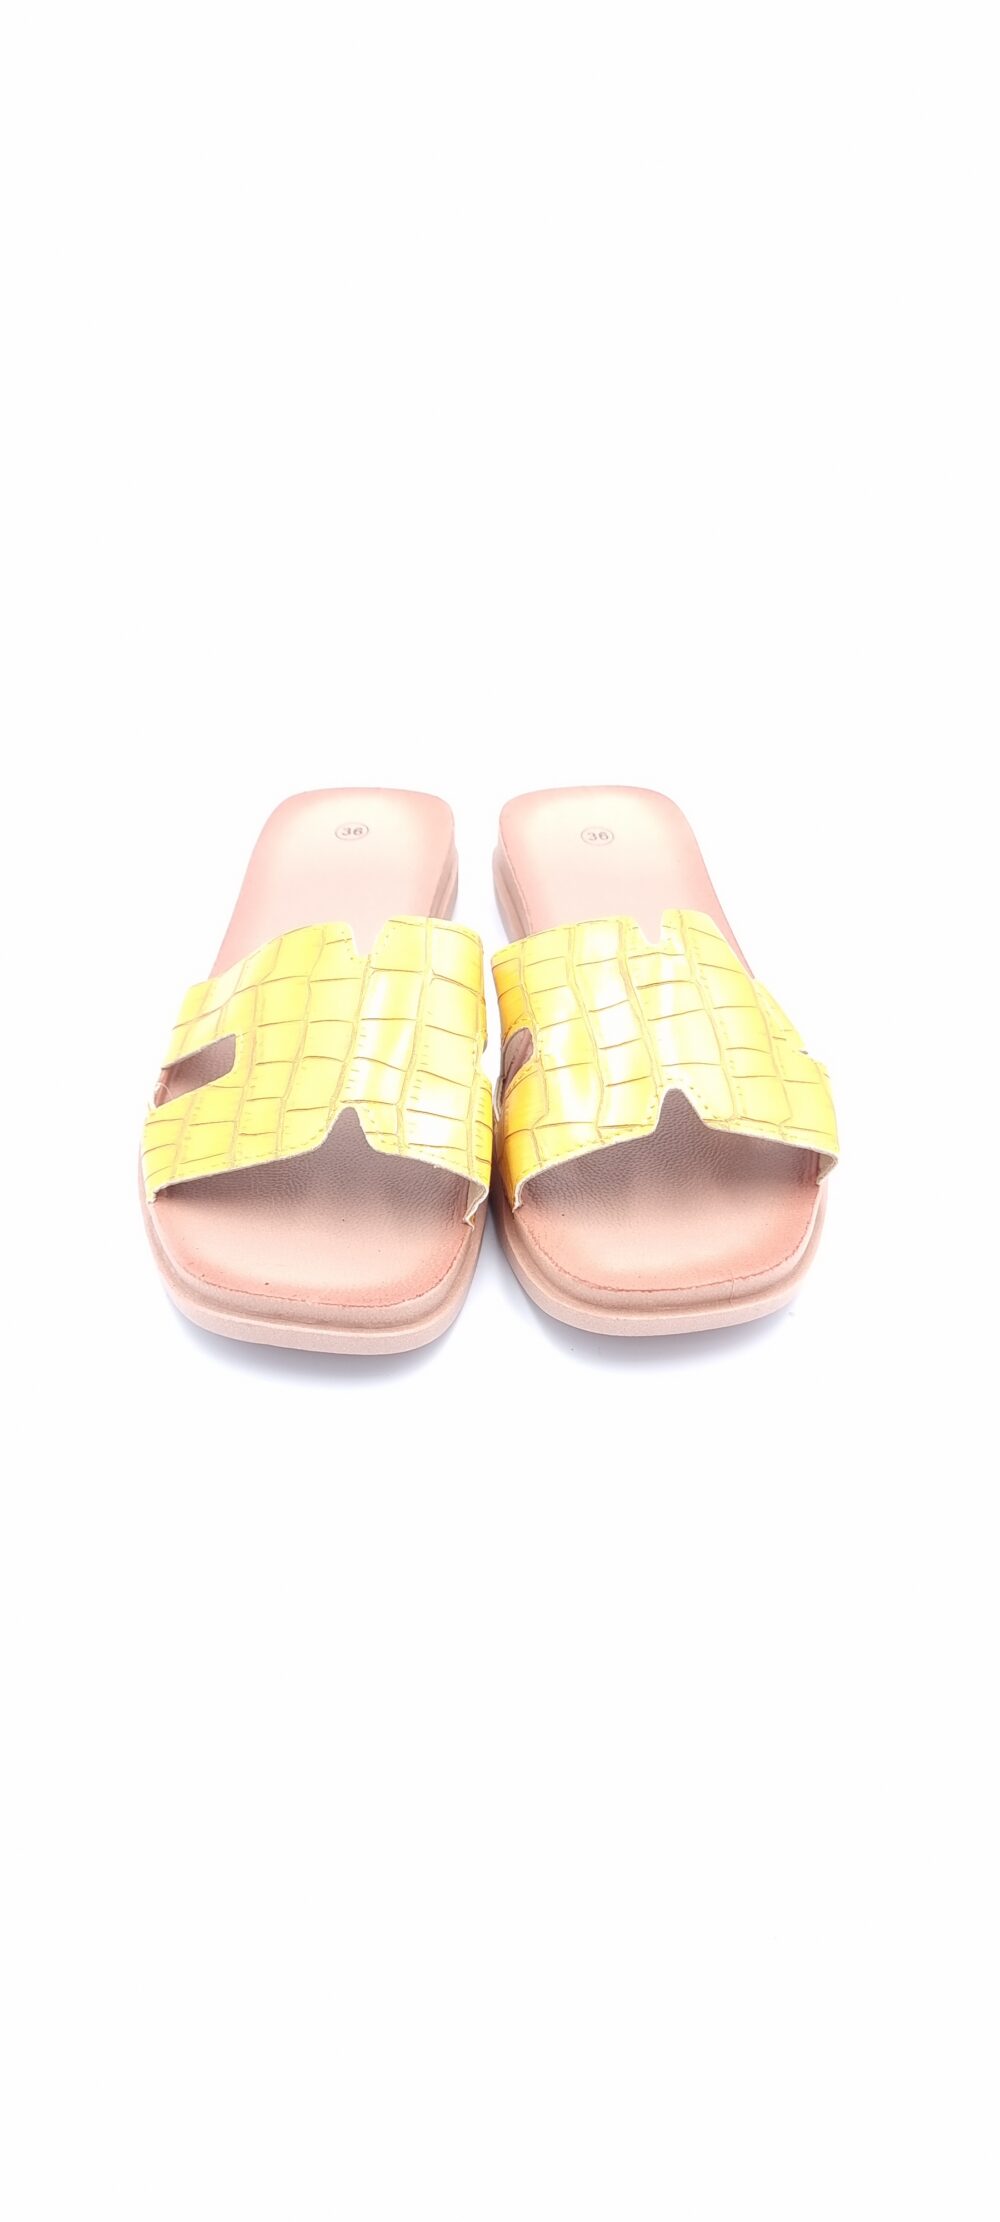 Crocus yellow slipper sandal